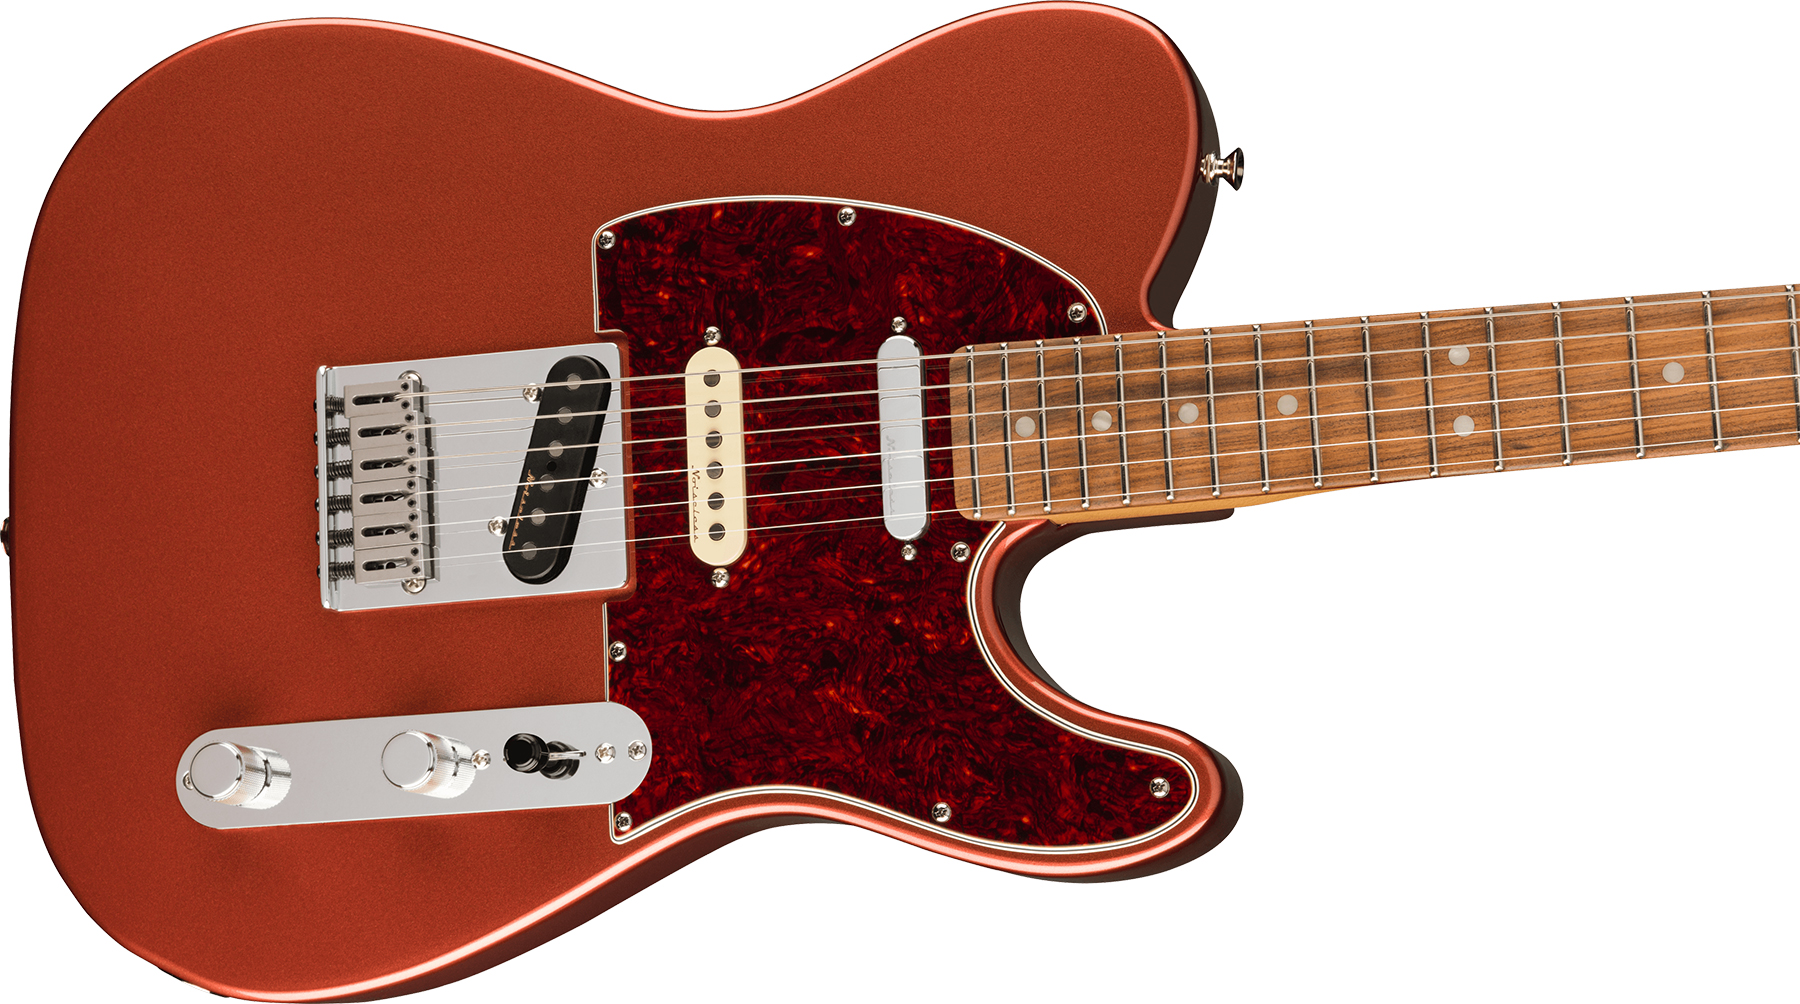 Fender Tele Player Plus Nashville Mex 3s Ht Pf - Aged Candy Apple Red - Guitarra eléctrica con forma de tel - Variation 2